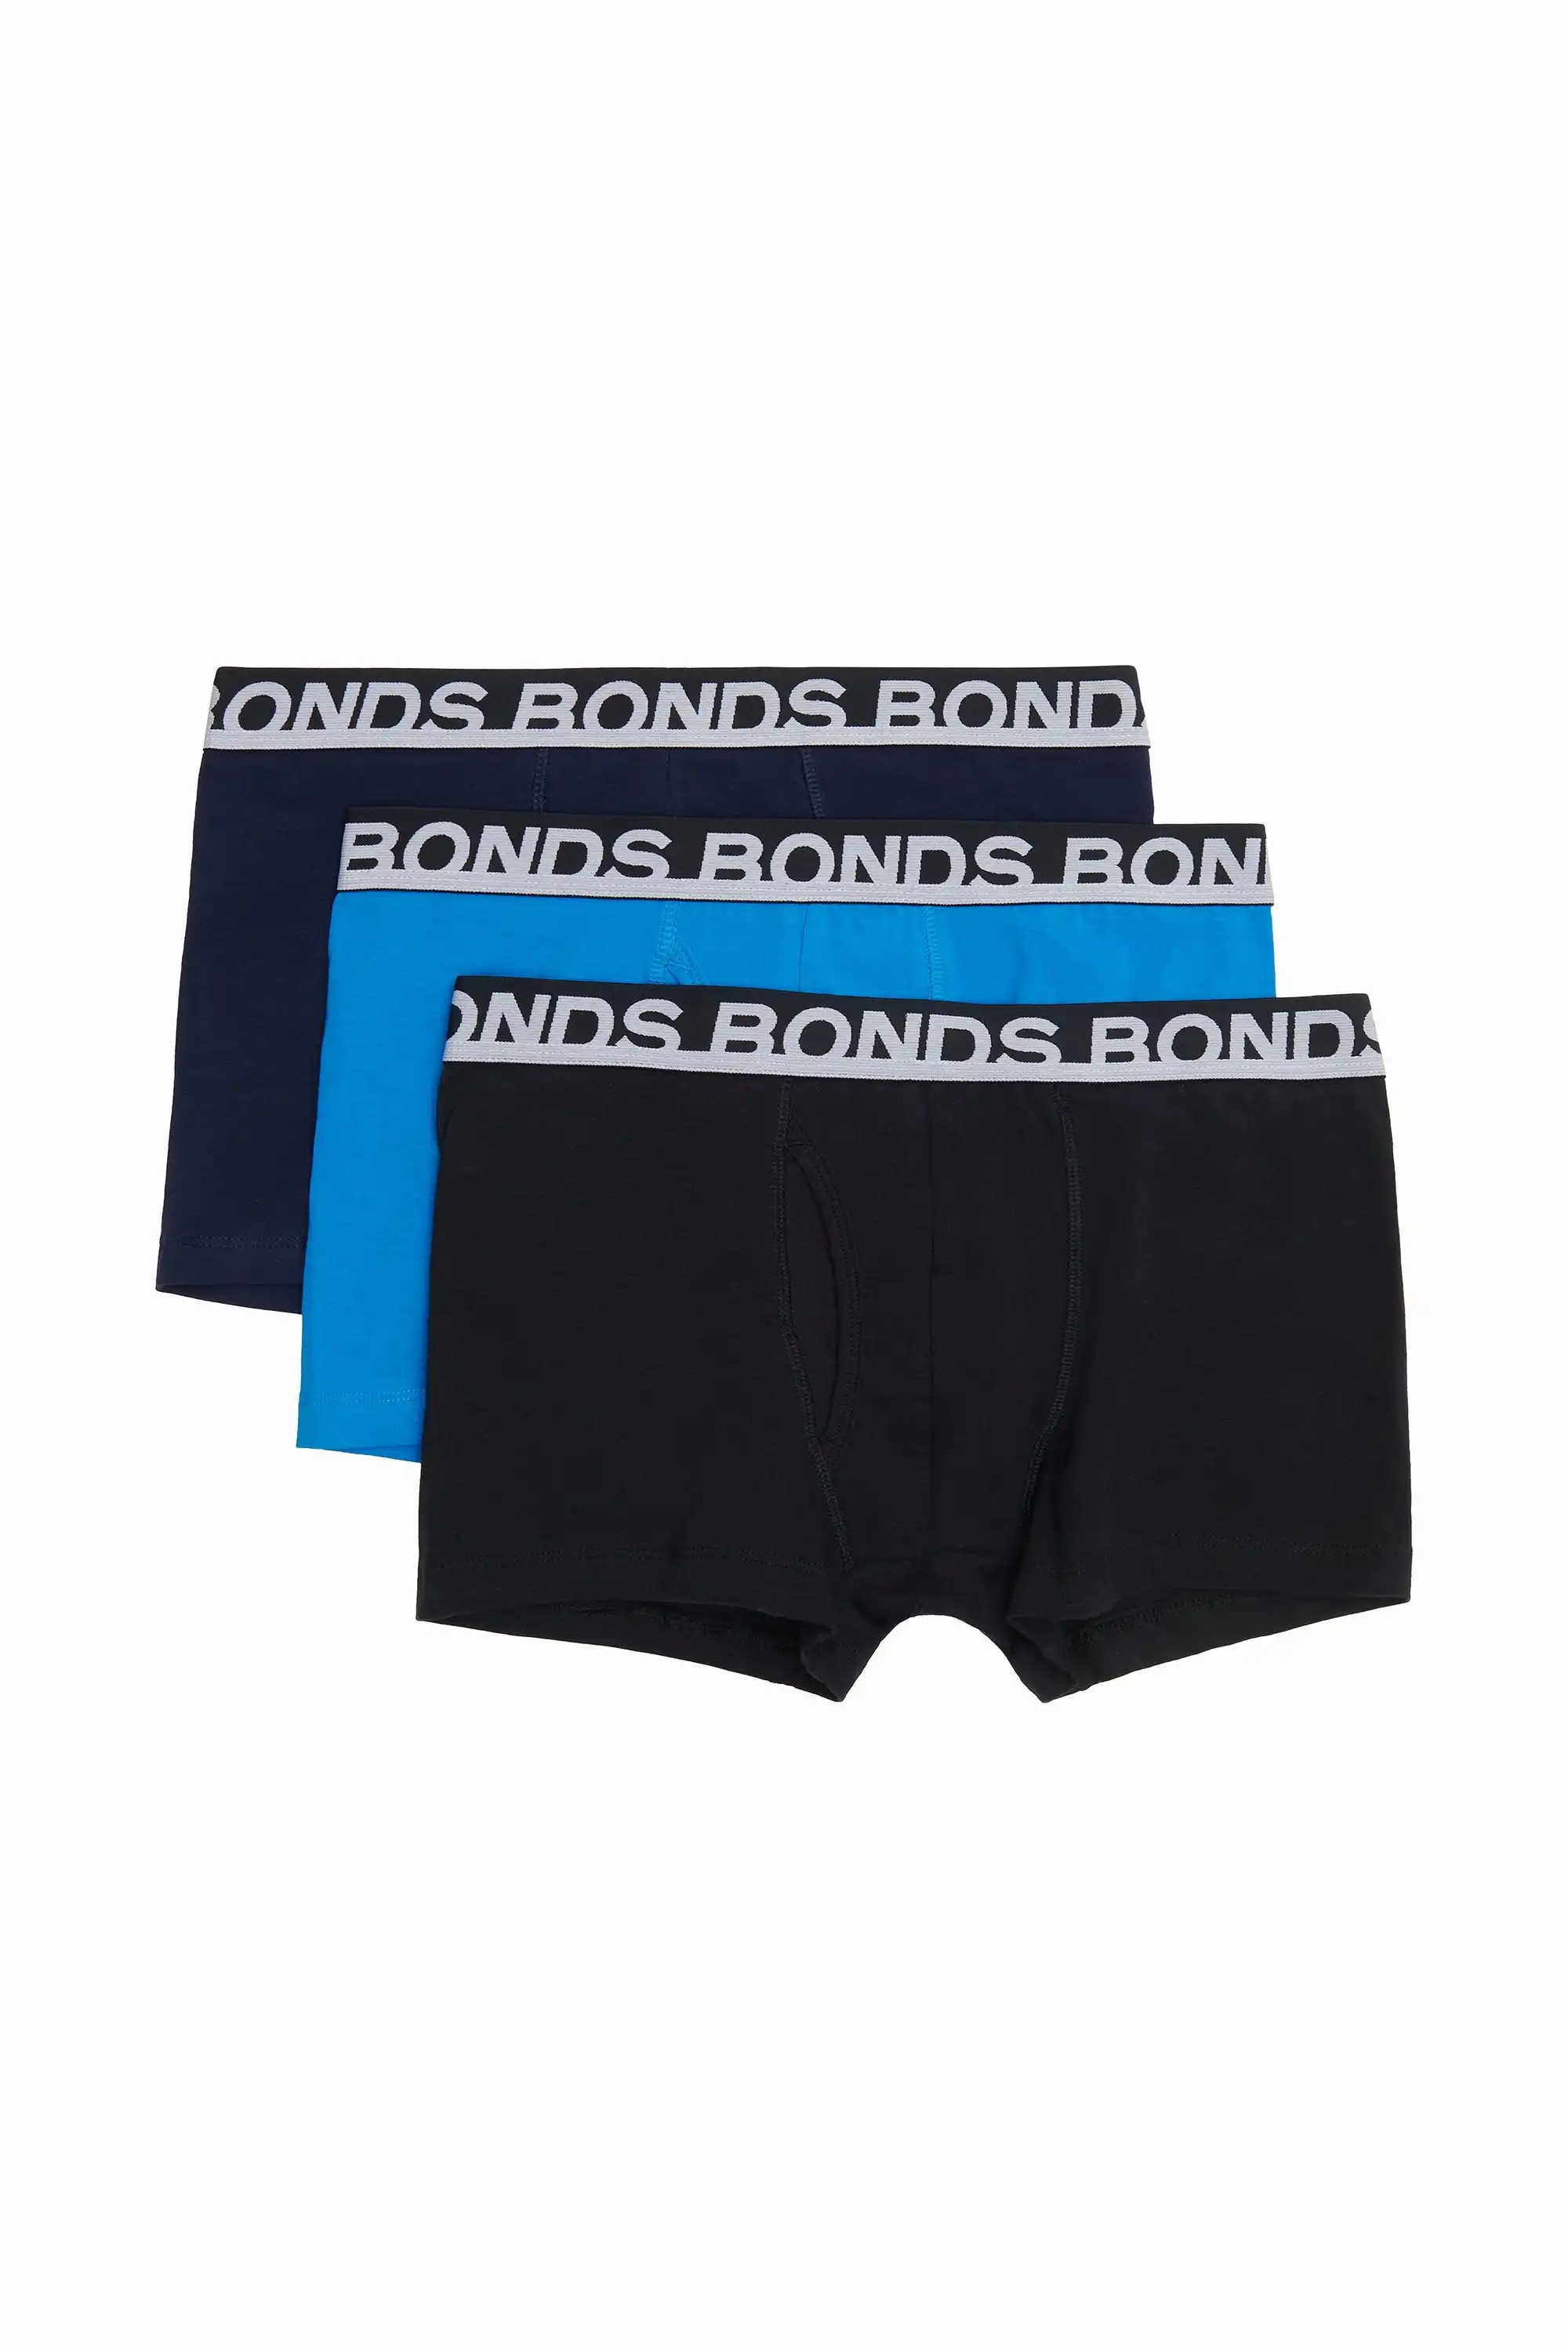 3 x Bonds Mens Everyday Trunks Underwear Black / Navy / Blue